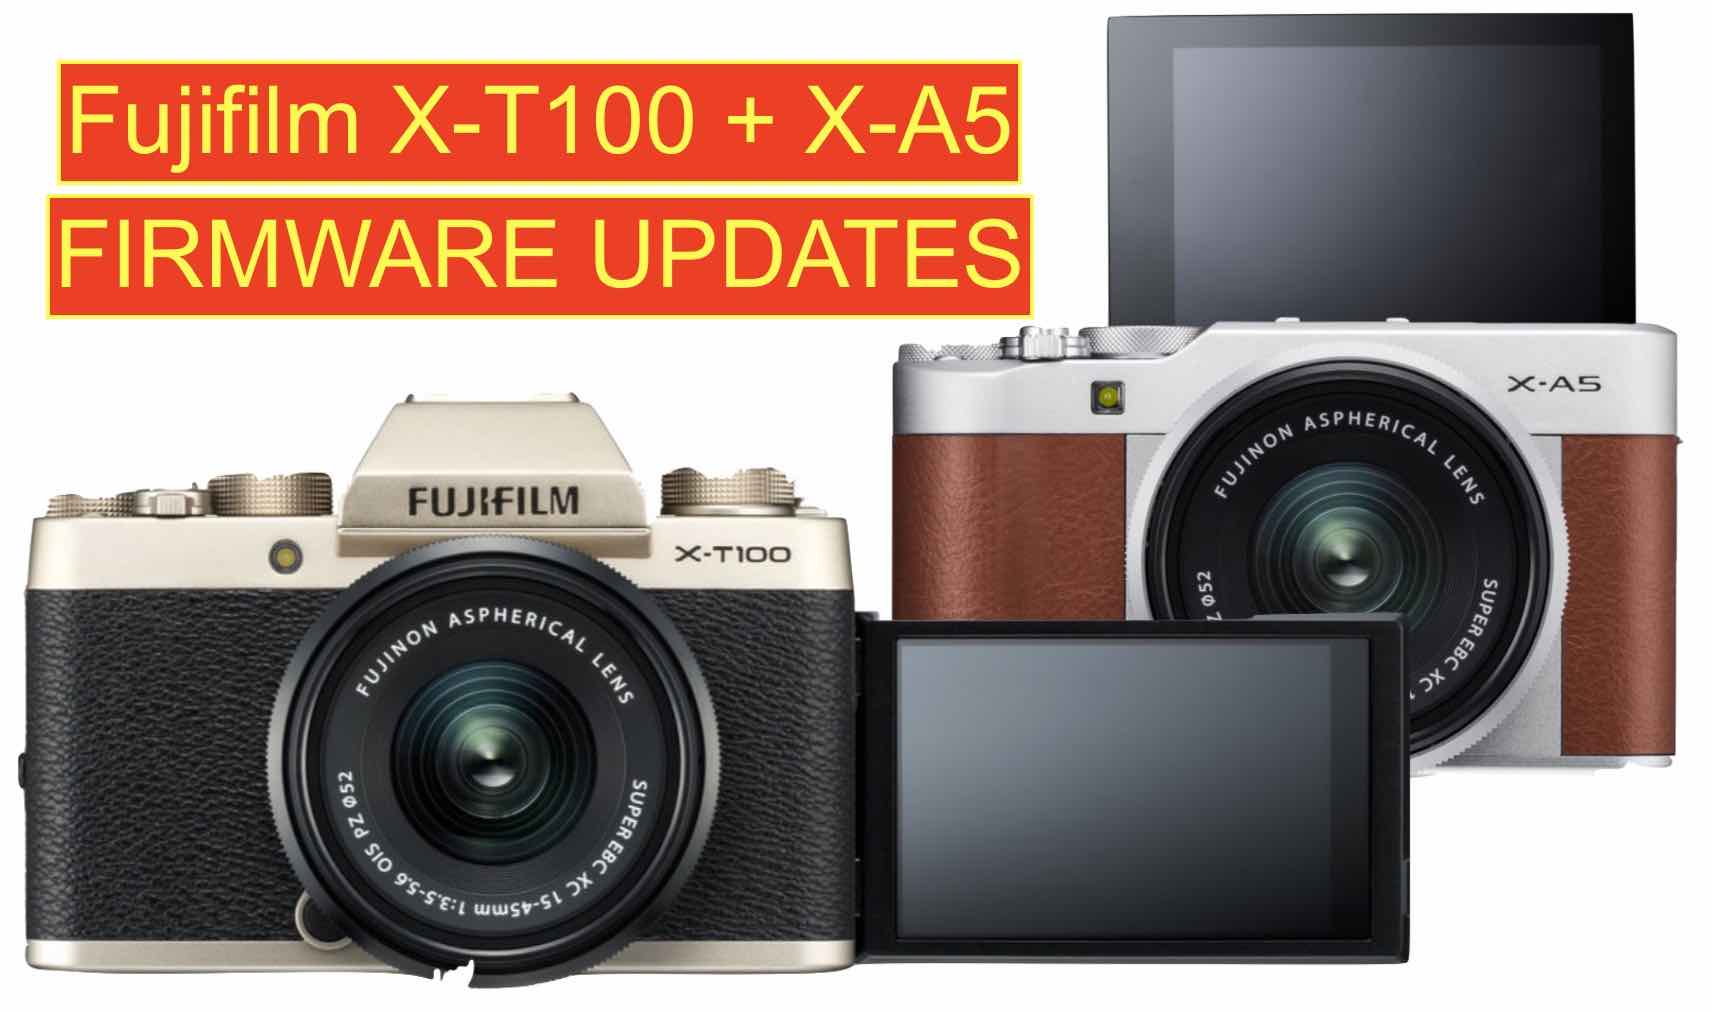 Fujifilm X-T100 and X-A5 Firmware Updates - Fuji Rumors